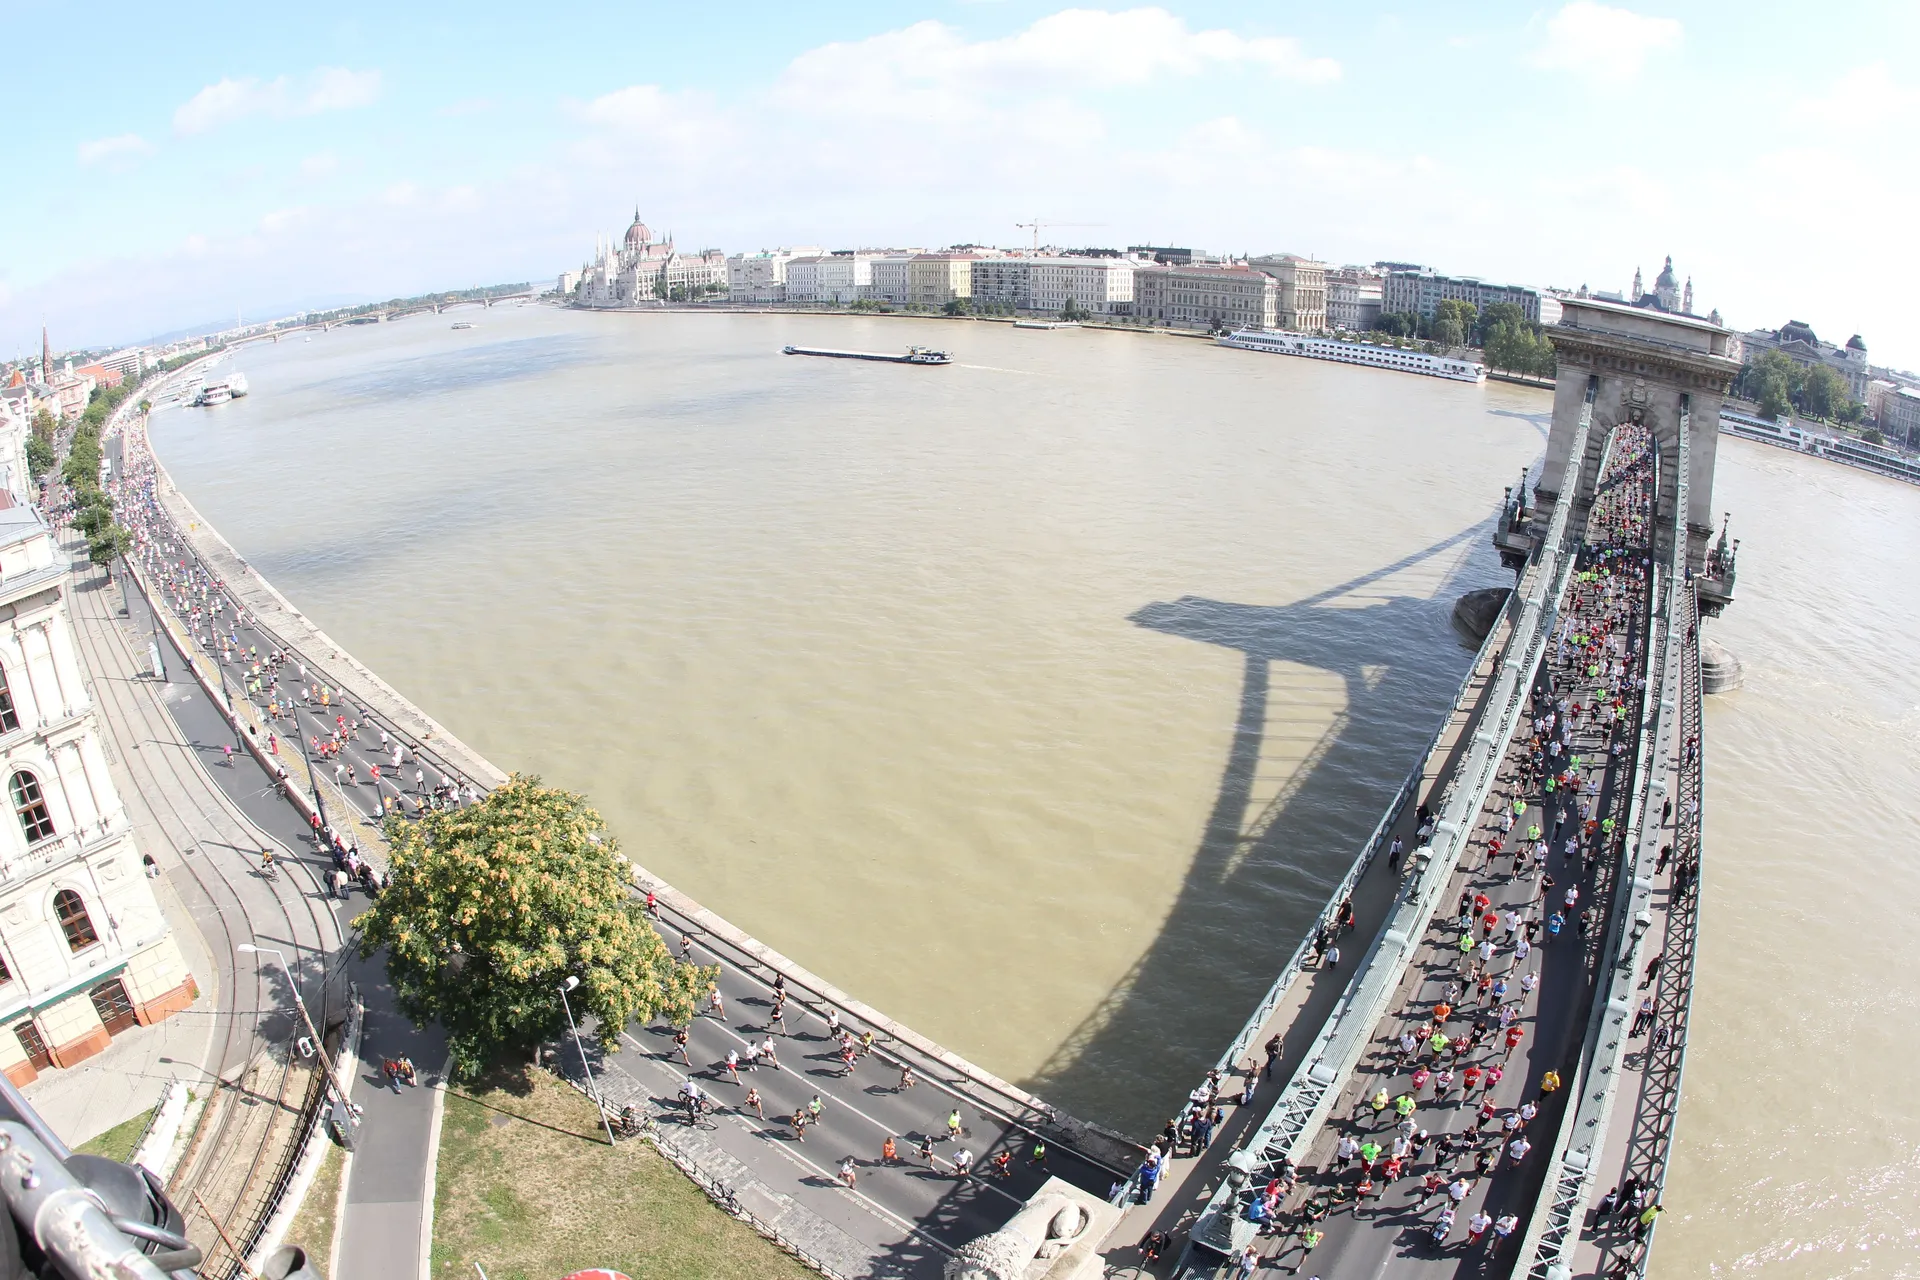 SPAR Budapest Marathon